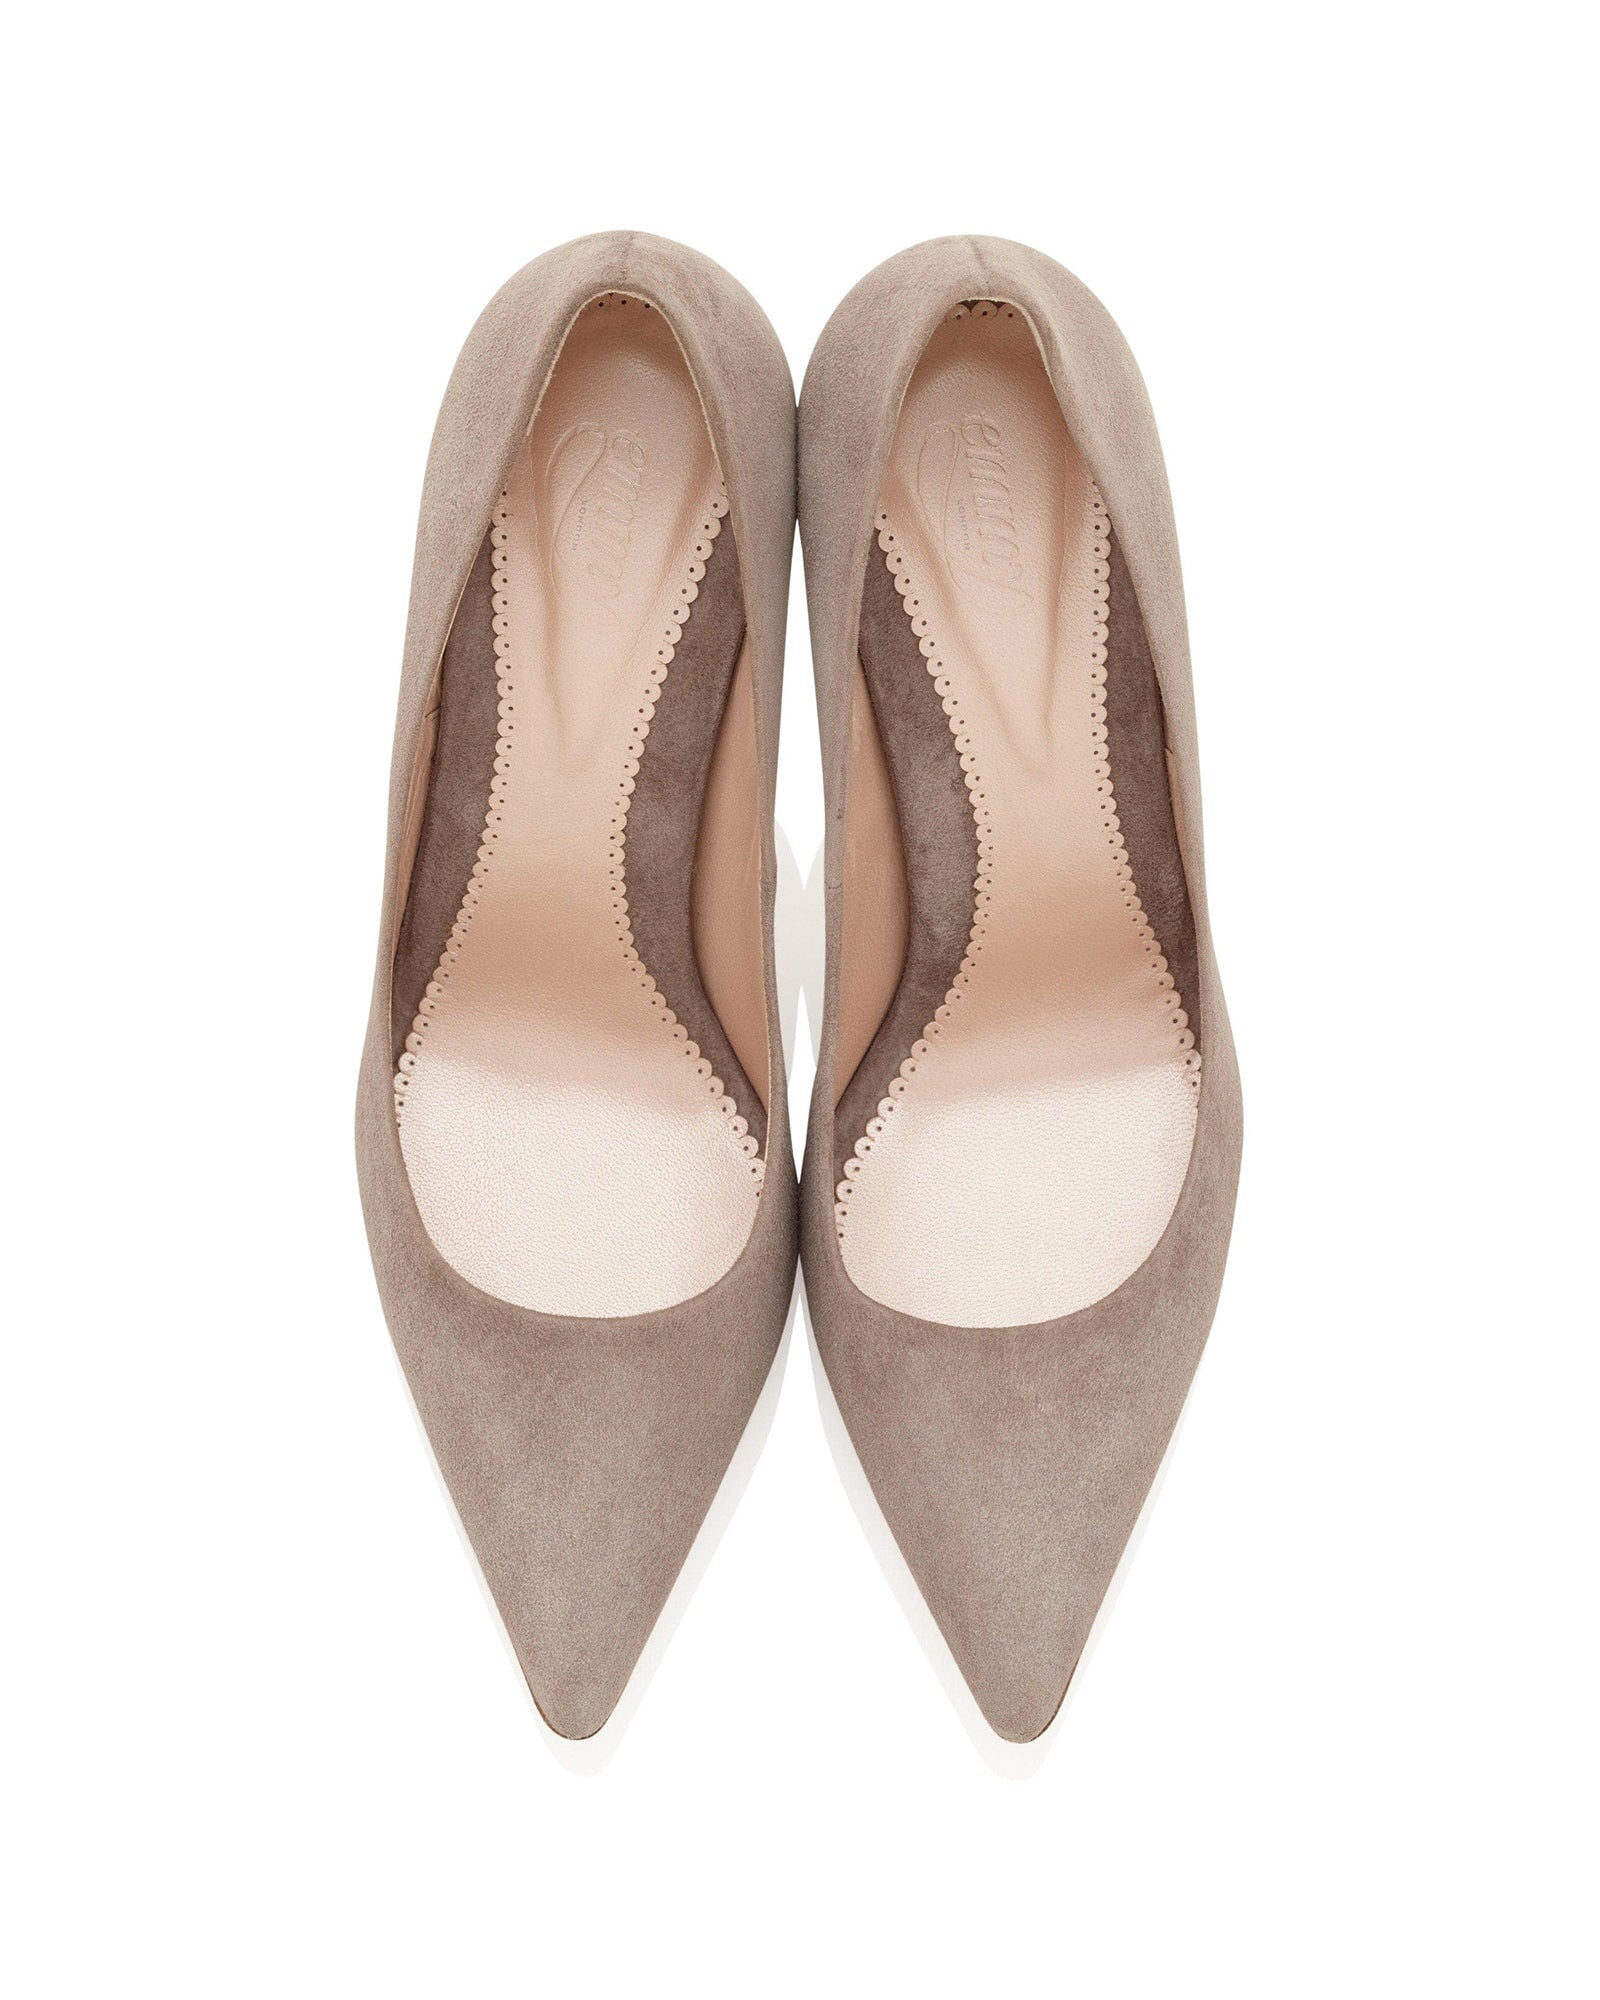 Rebecca Cinder Fashion Shoe Grey Pointed Court Shoe  image